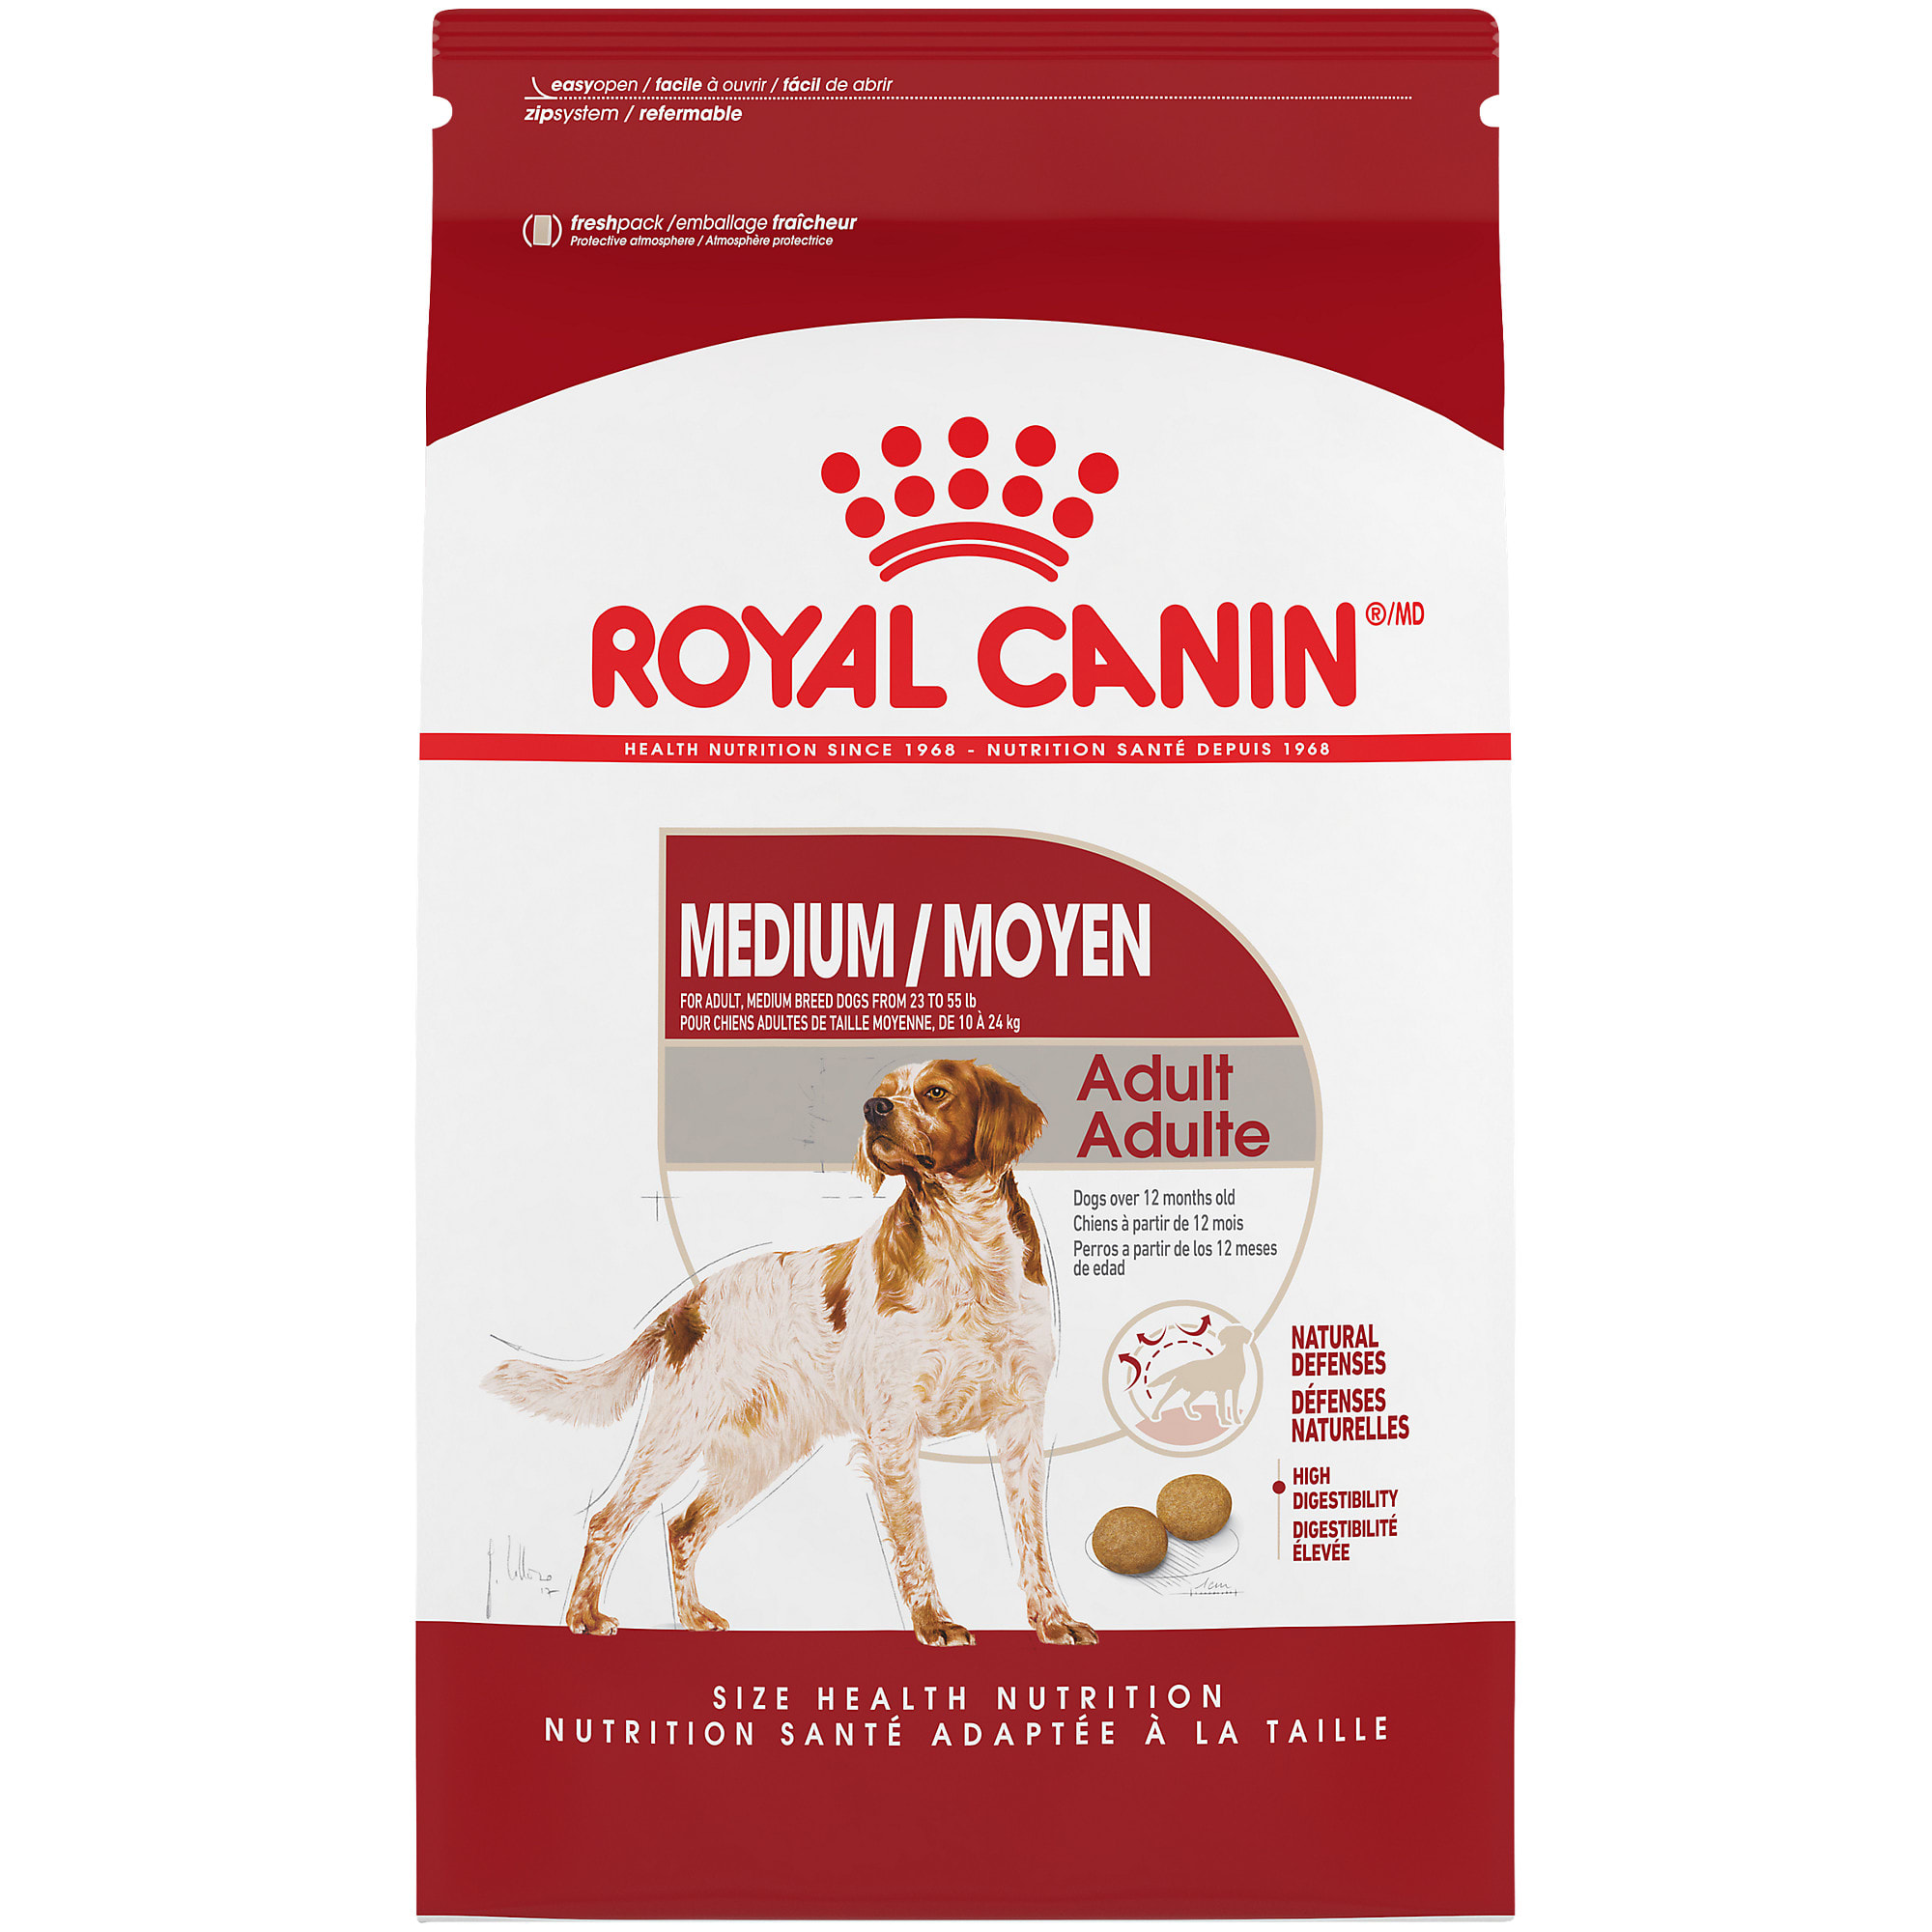 Goed doen Hoe Christian royal canin beagle review,yasserchemicals.com